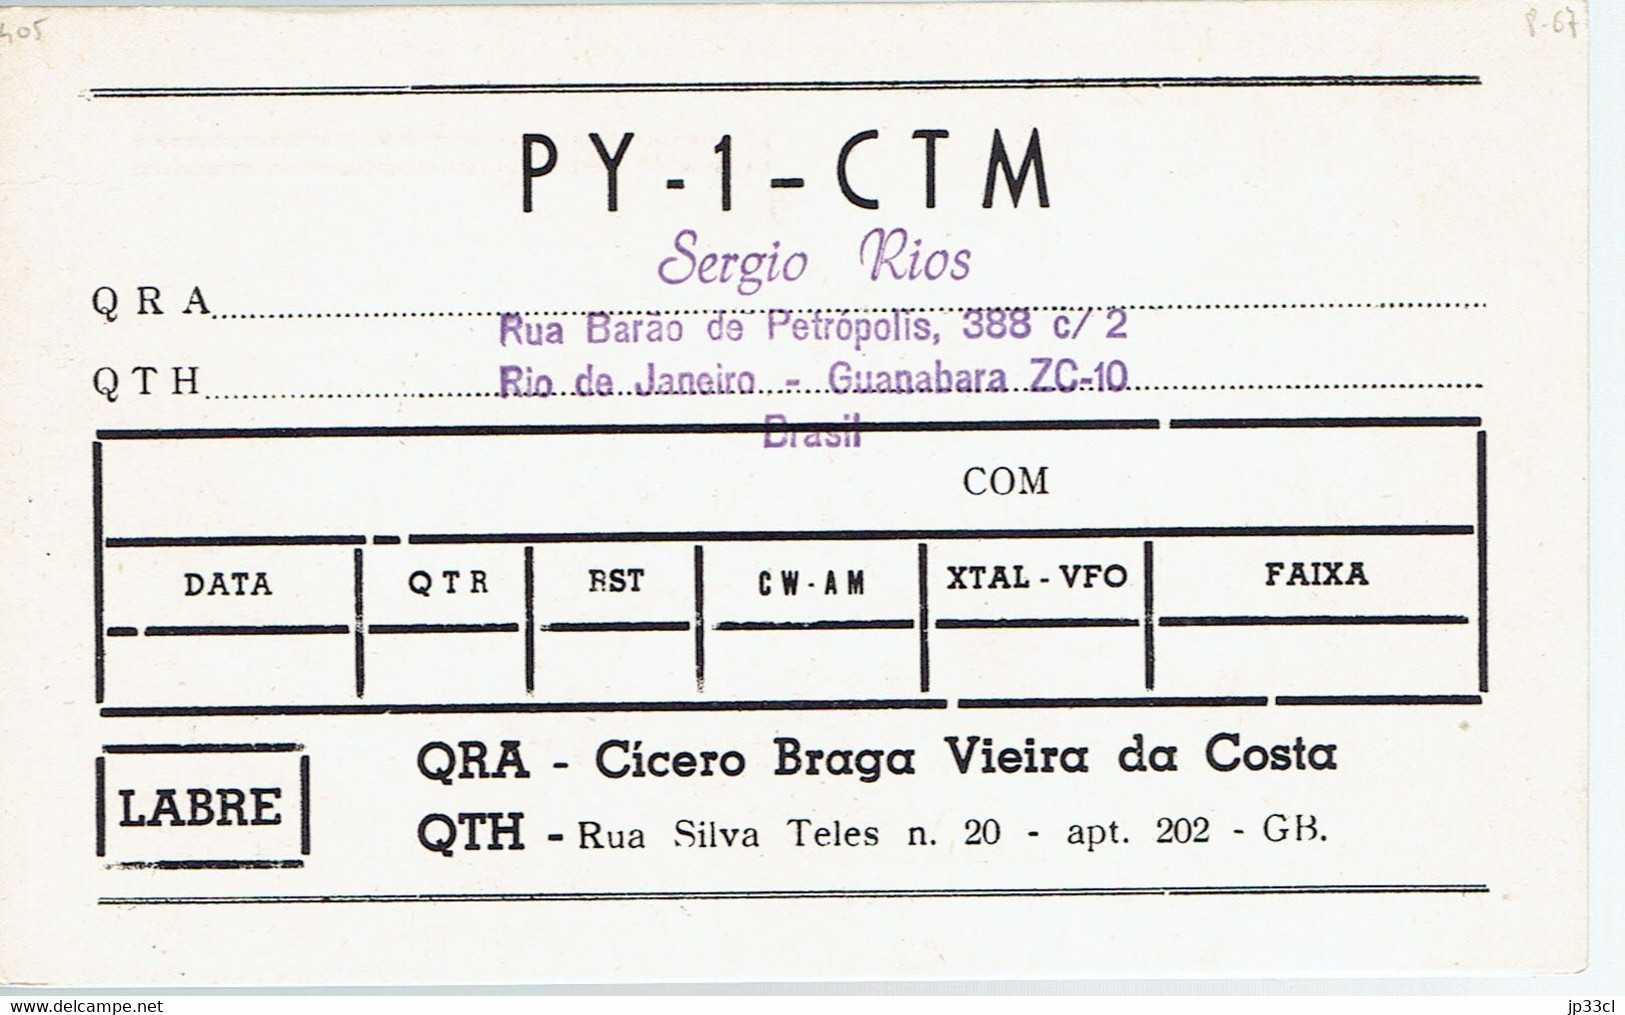 Aigle Adler Eagle "Achtung" On QSL From Sergio Rios, Cicero Braga, Viera Da Costa, Brasil (1967) - CB